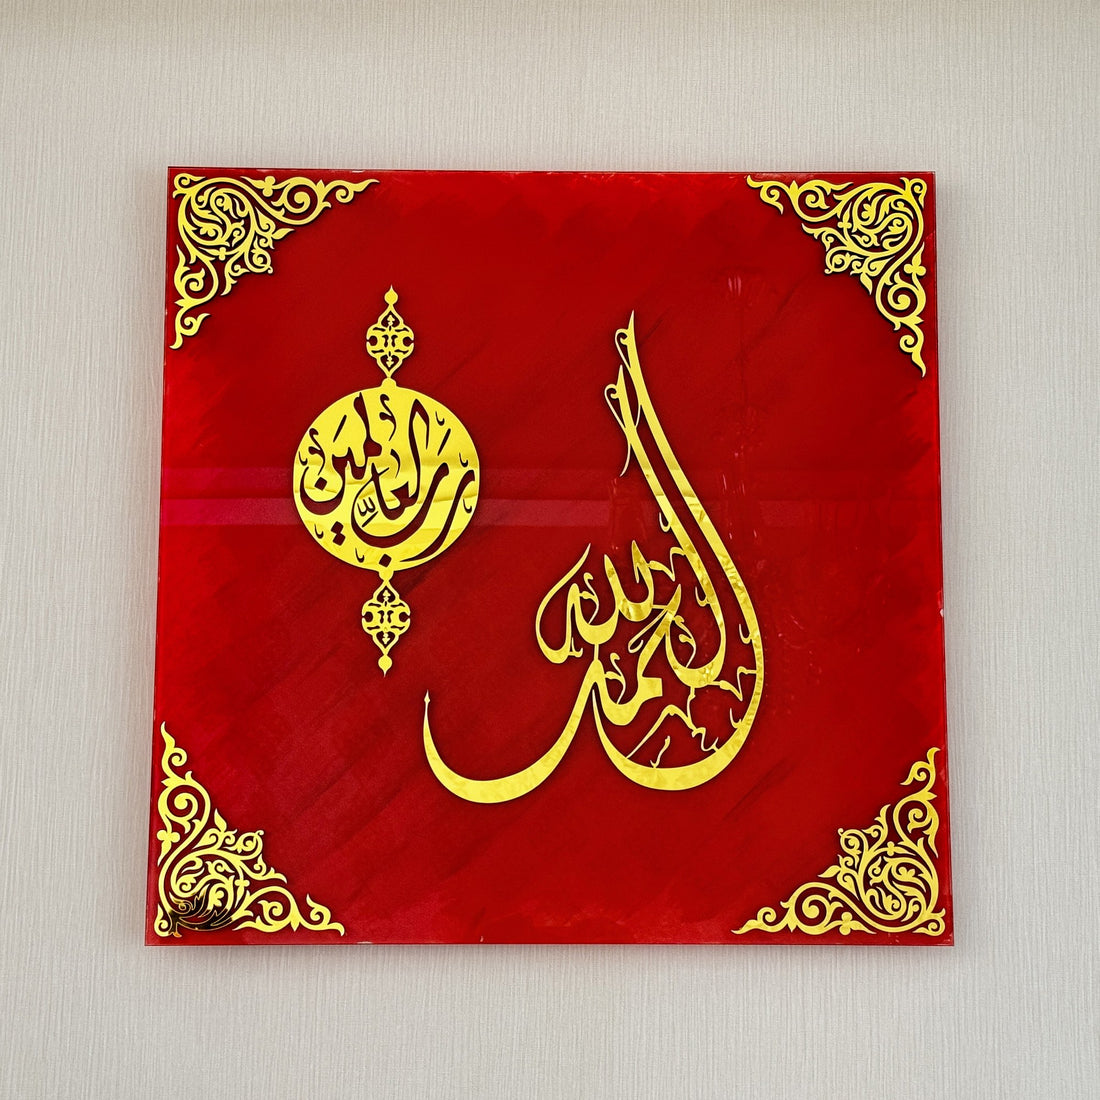 islamic-glass-surah-al-fatiha-verse-1-glass-islamic-wall-art-islamic-calligraphy-inspirational-wall-piece-shukranislamicarts